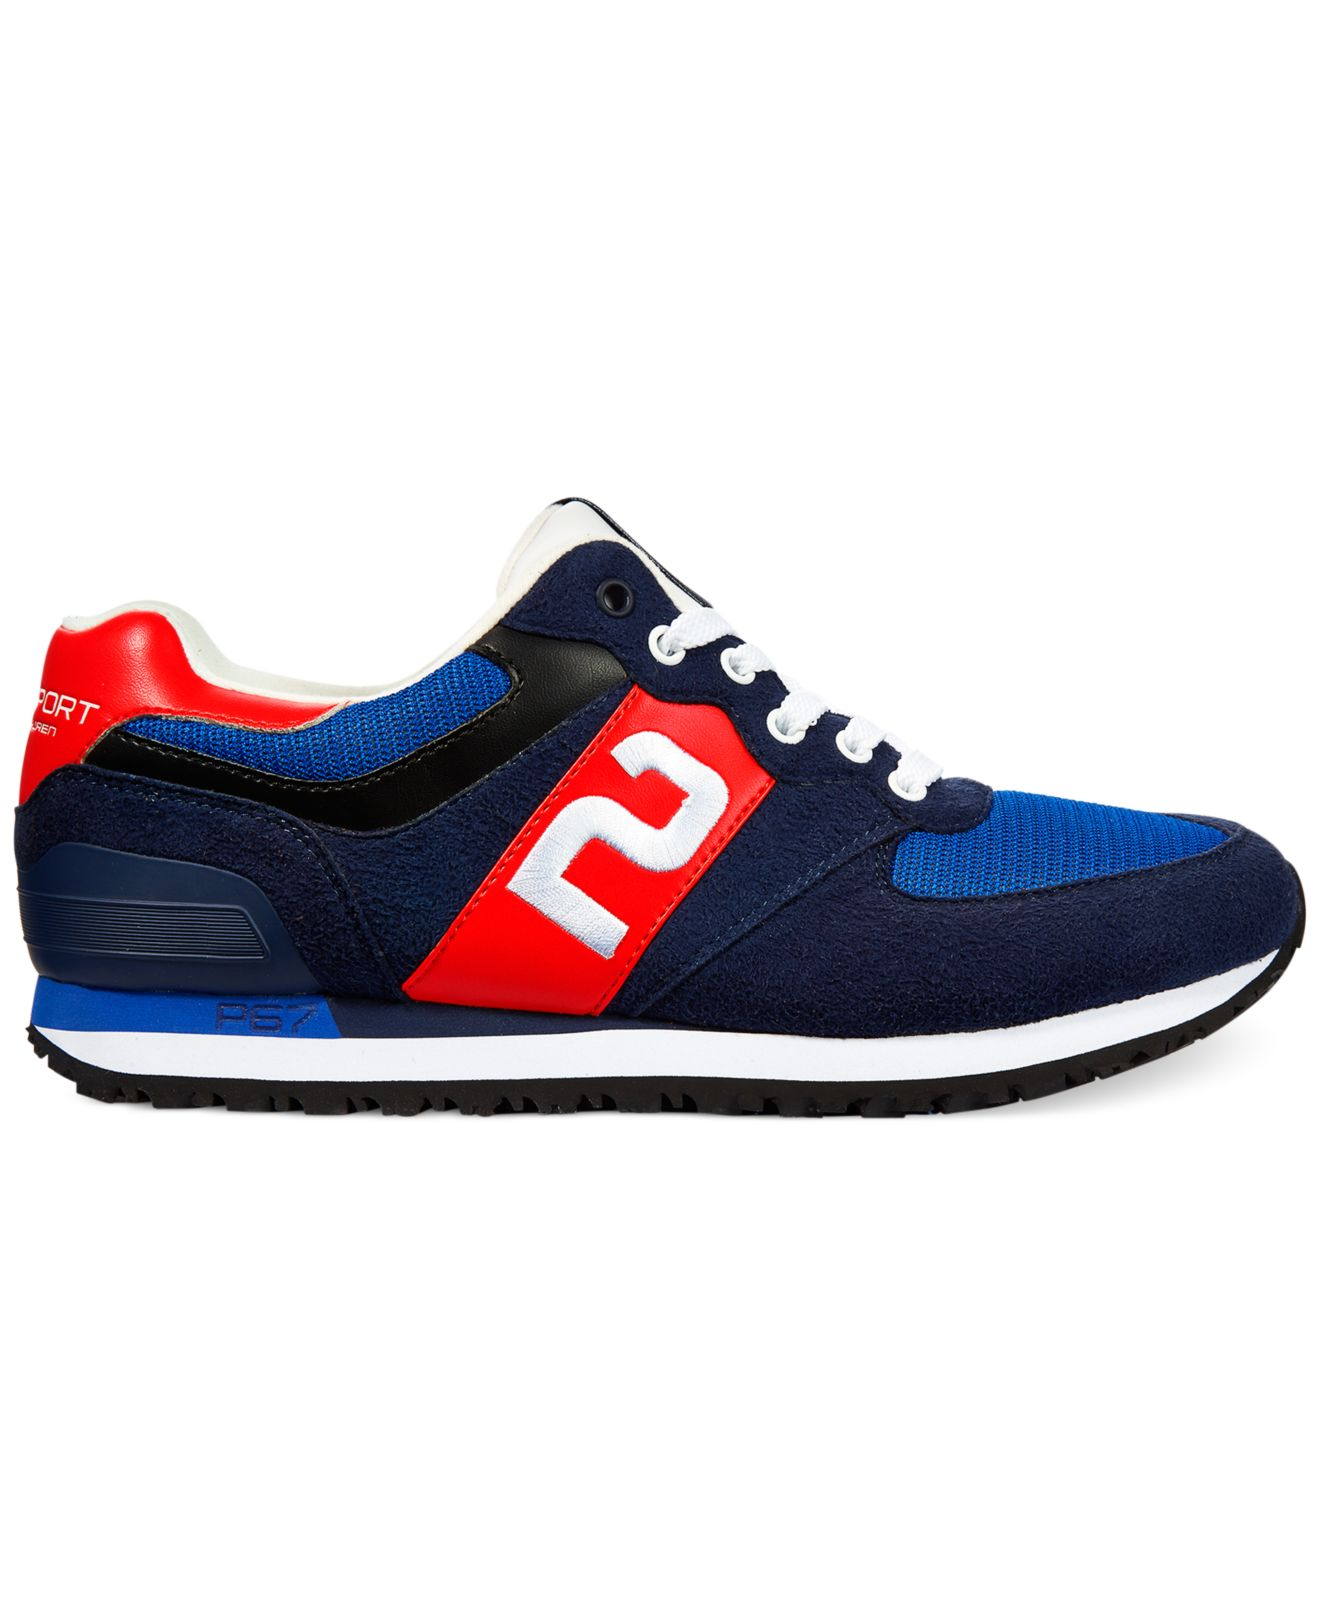 Lyst - Polo Ralph Lauren Slaton Number Sneakers in Blue for Men